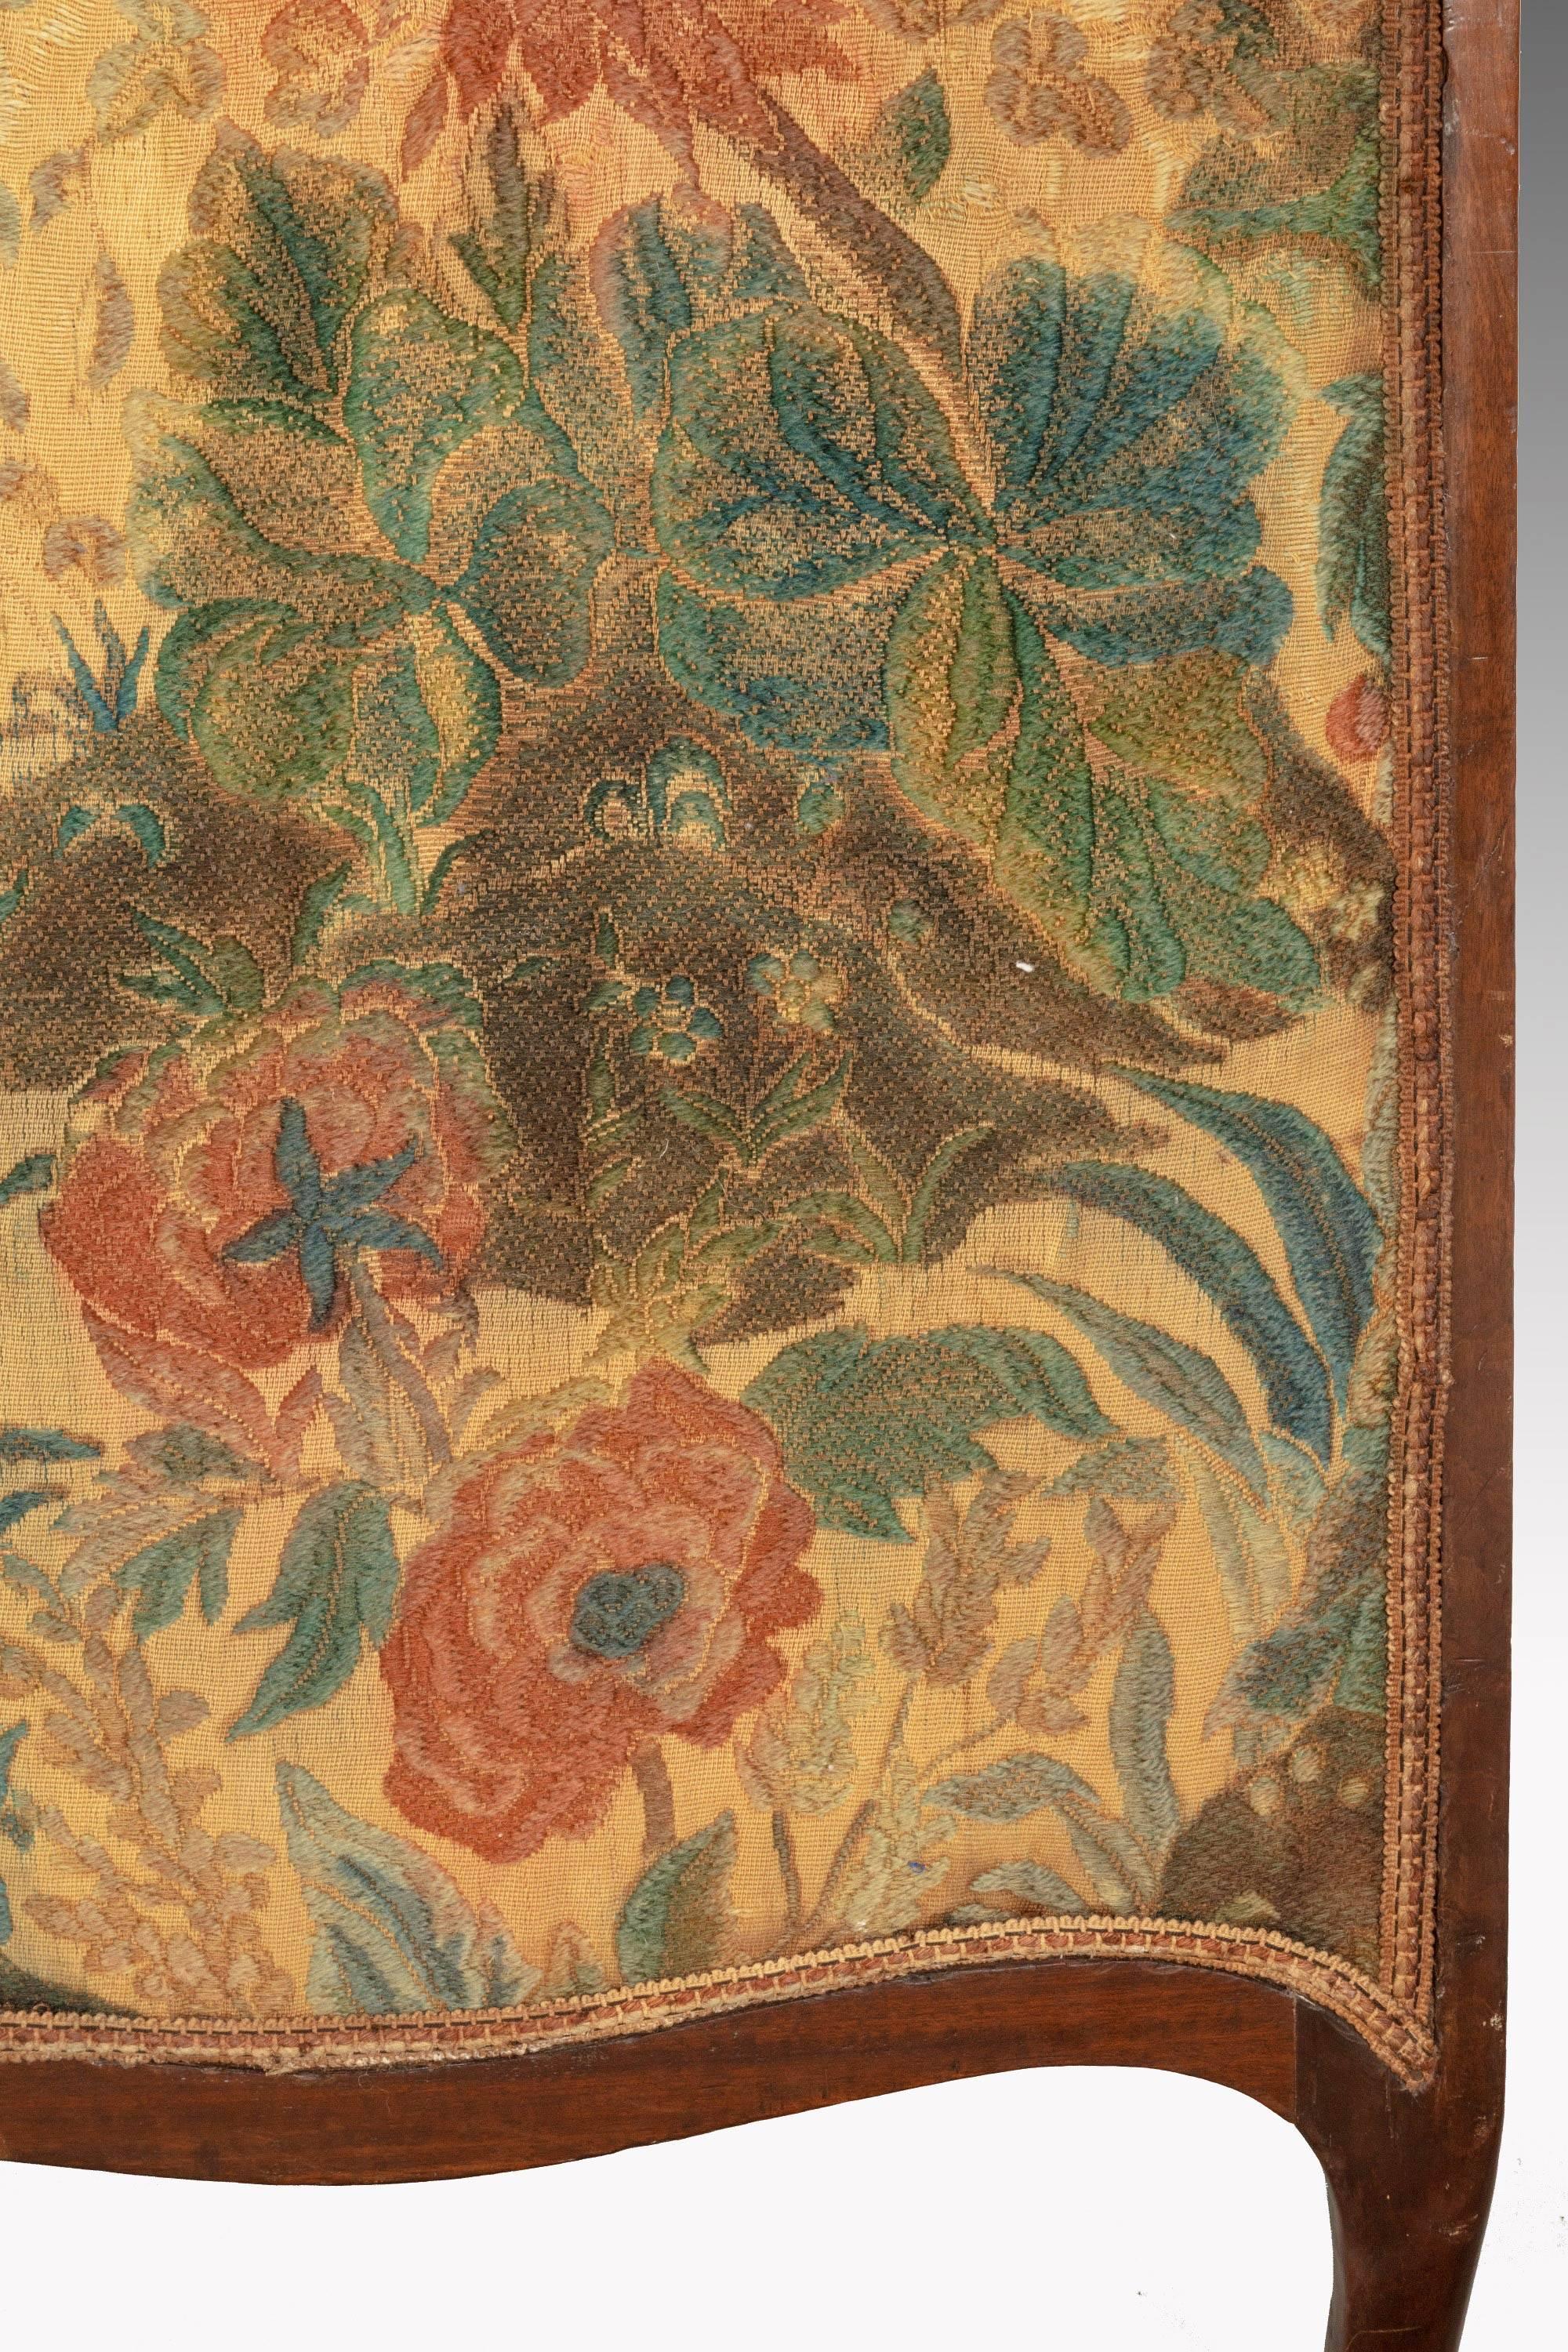 George III Period Mahogany Framed Tapestry Sofa 3